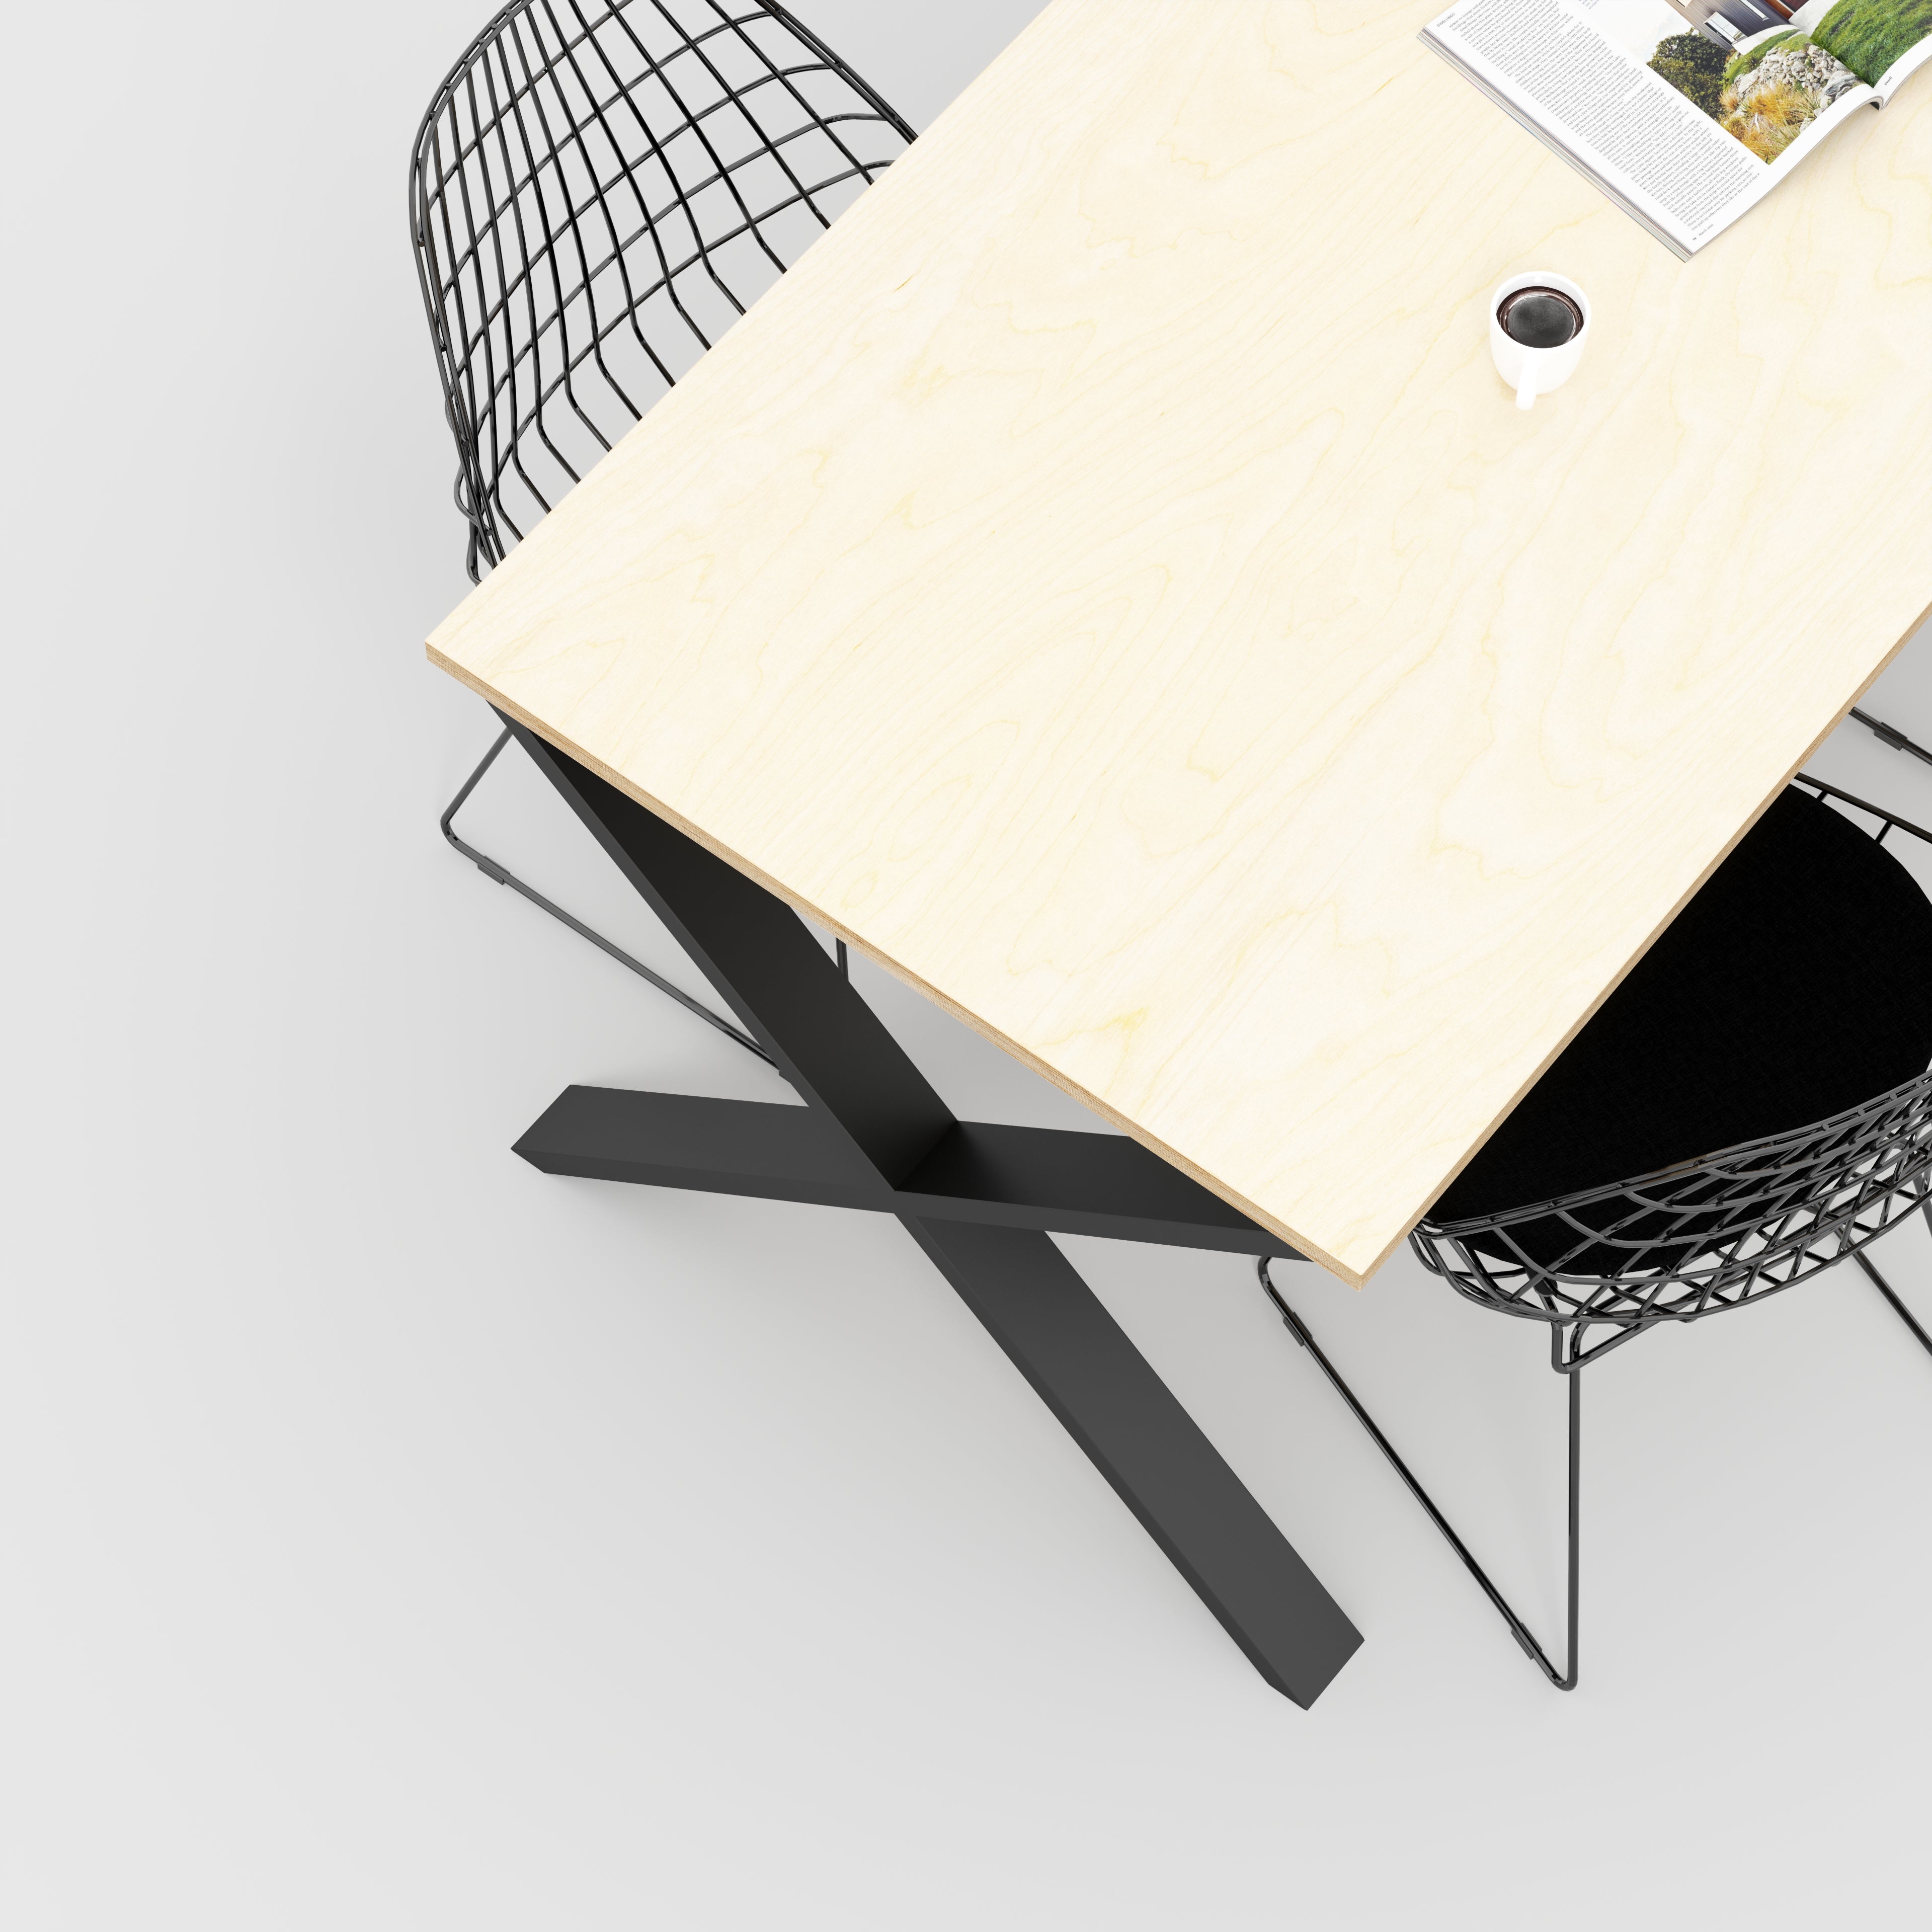 Custom Plywood Table with X-Frame Industrial Legs